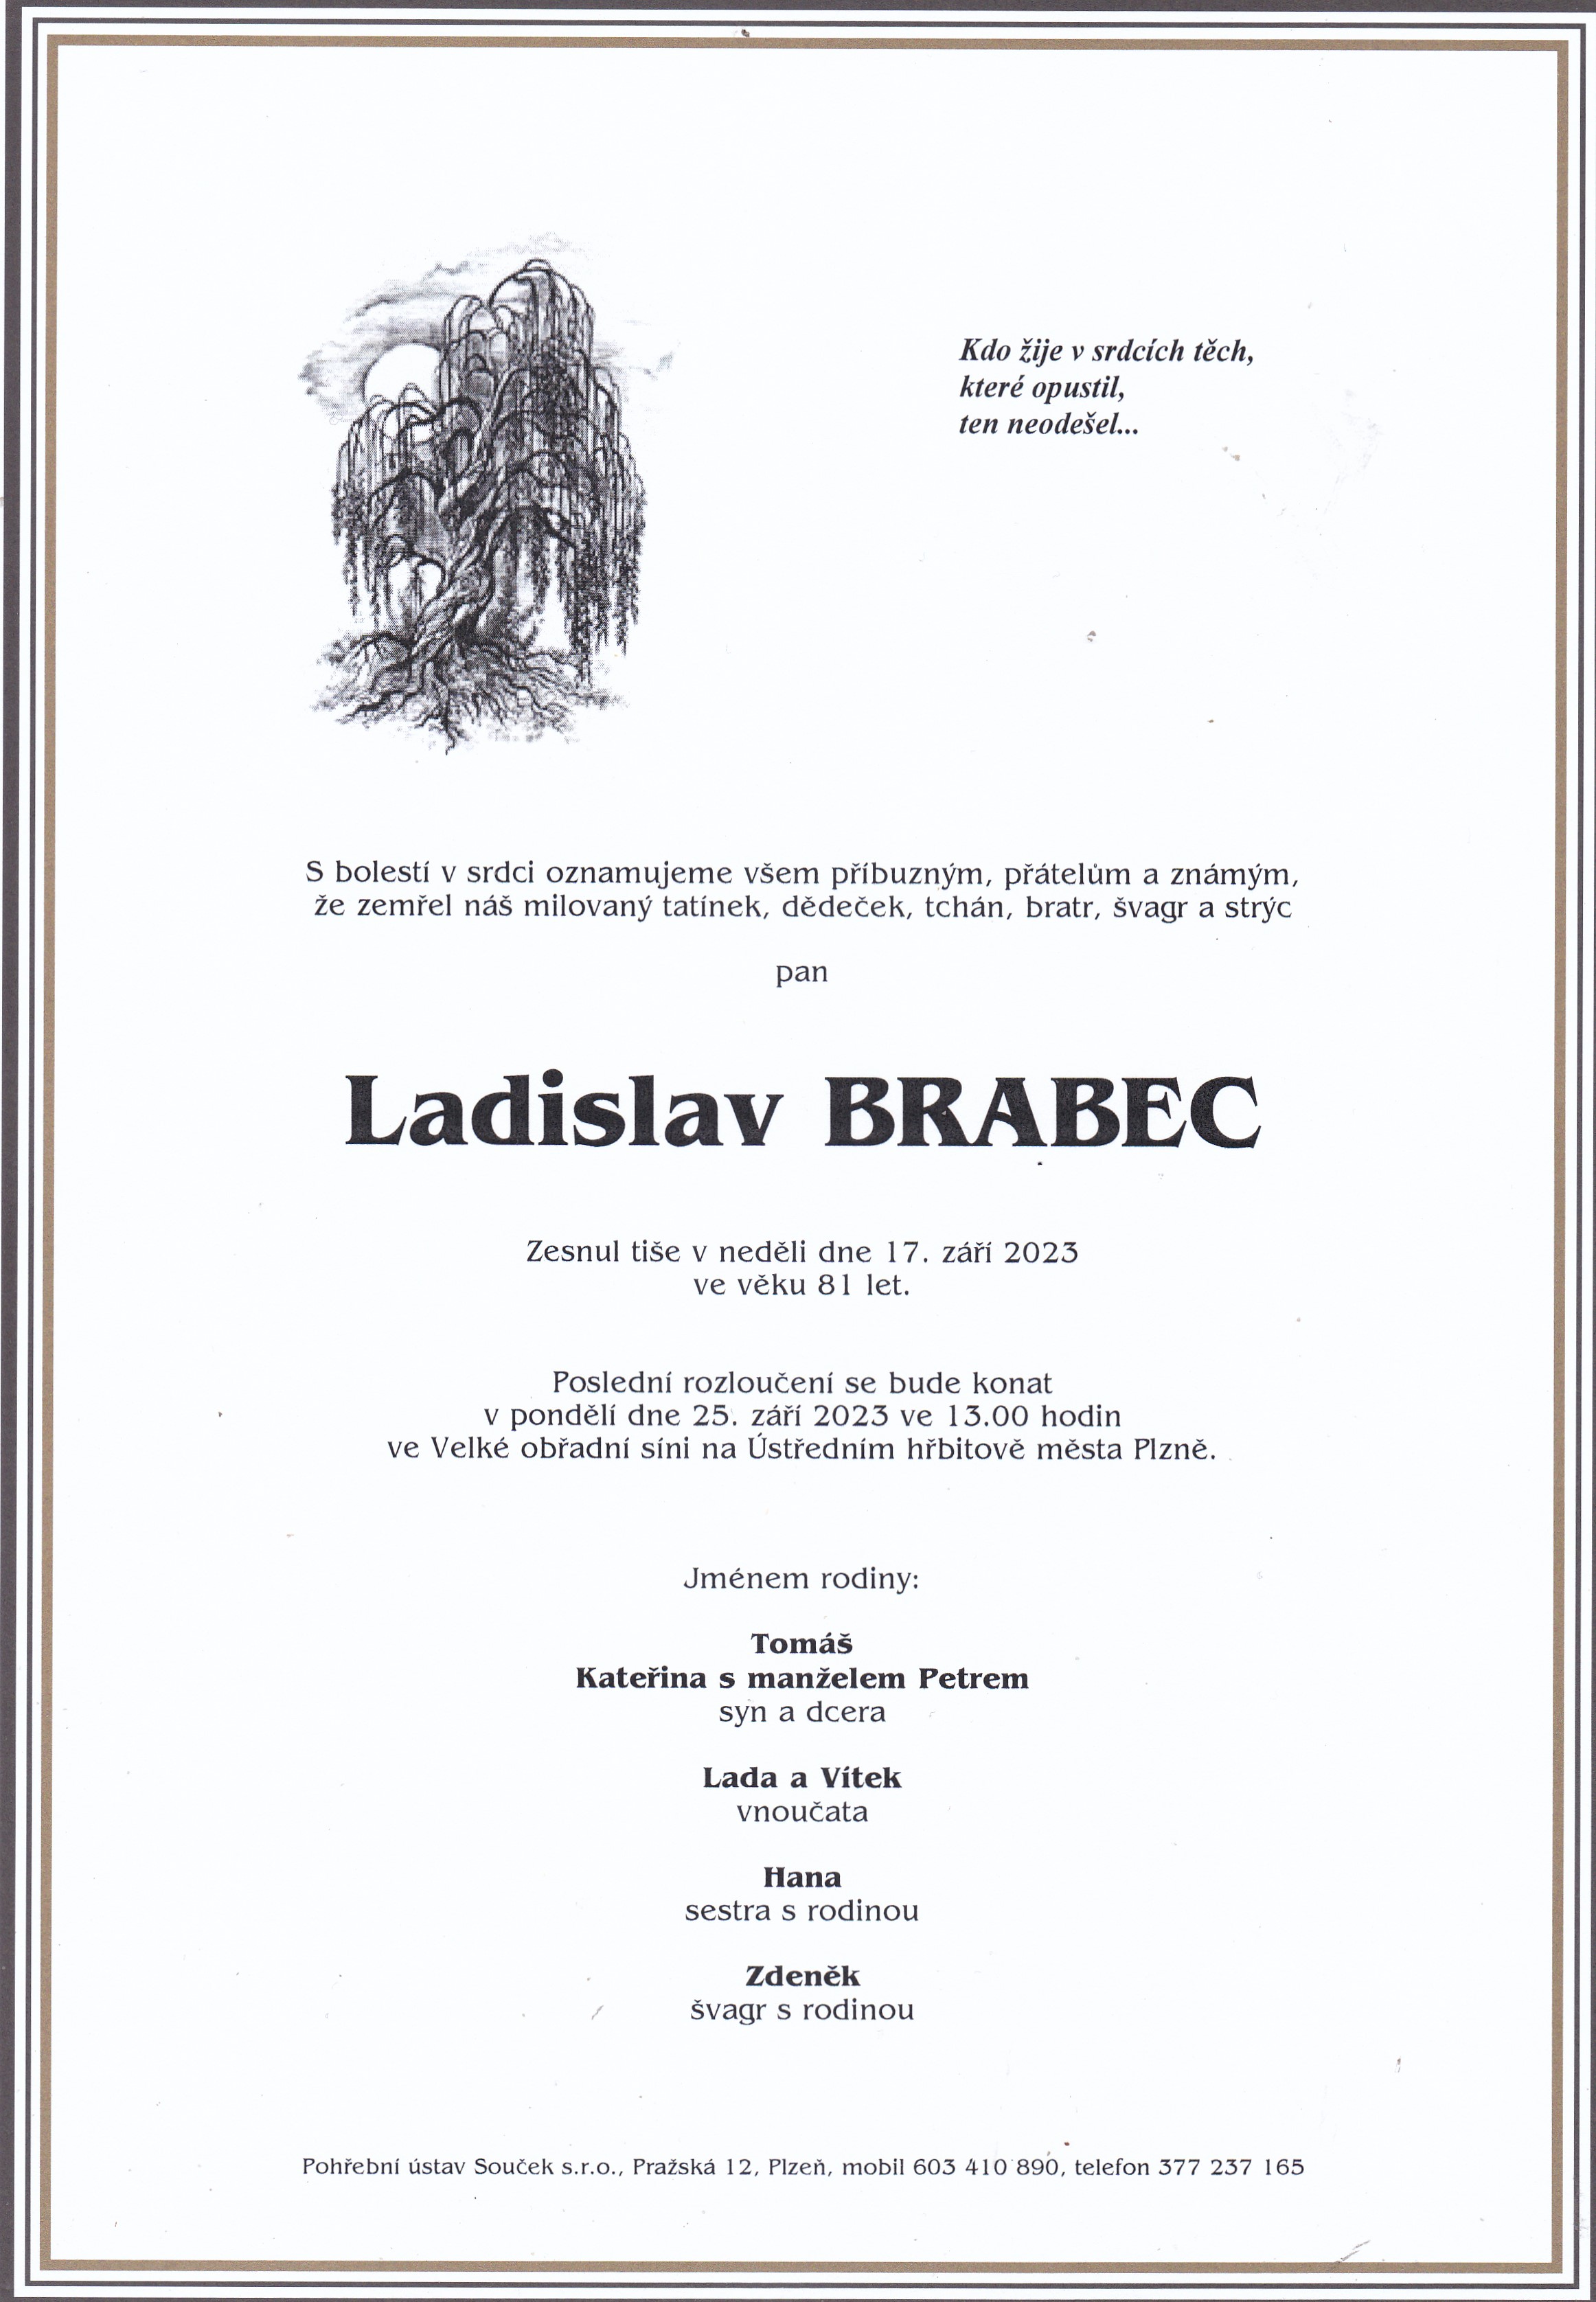 Ladislav Brabec 21.3.1942 - 17.9.2023